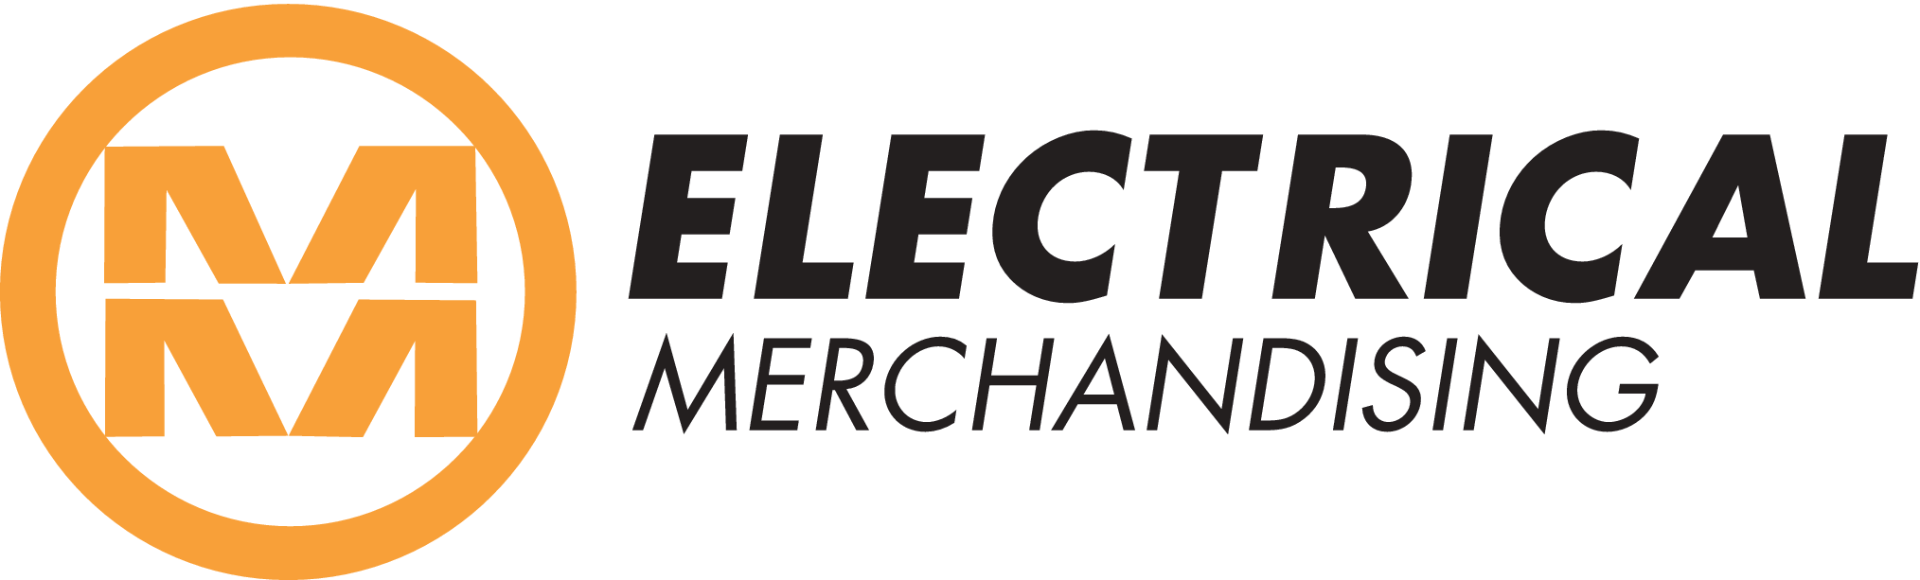 Electrical Merchandising